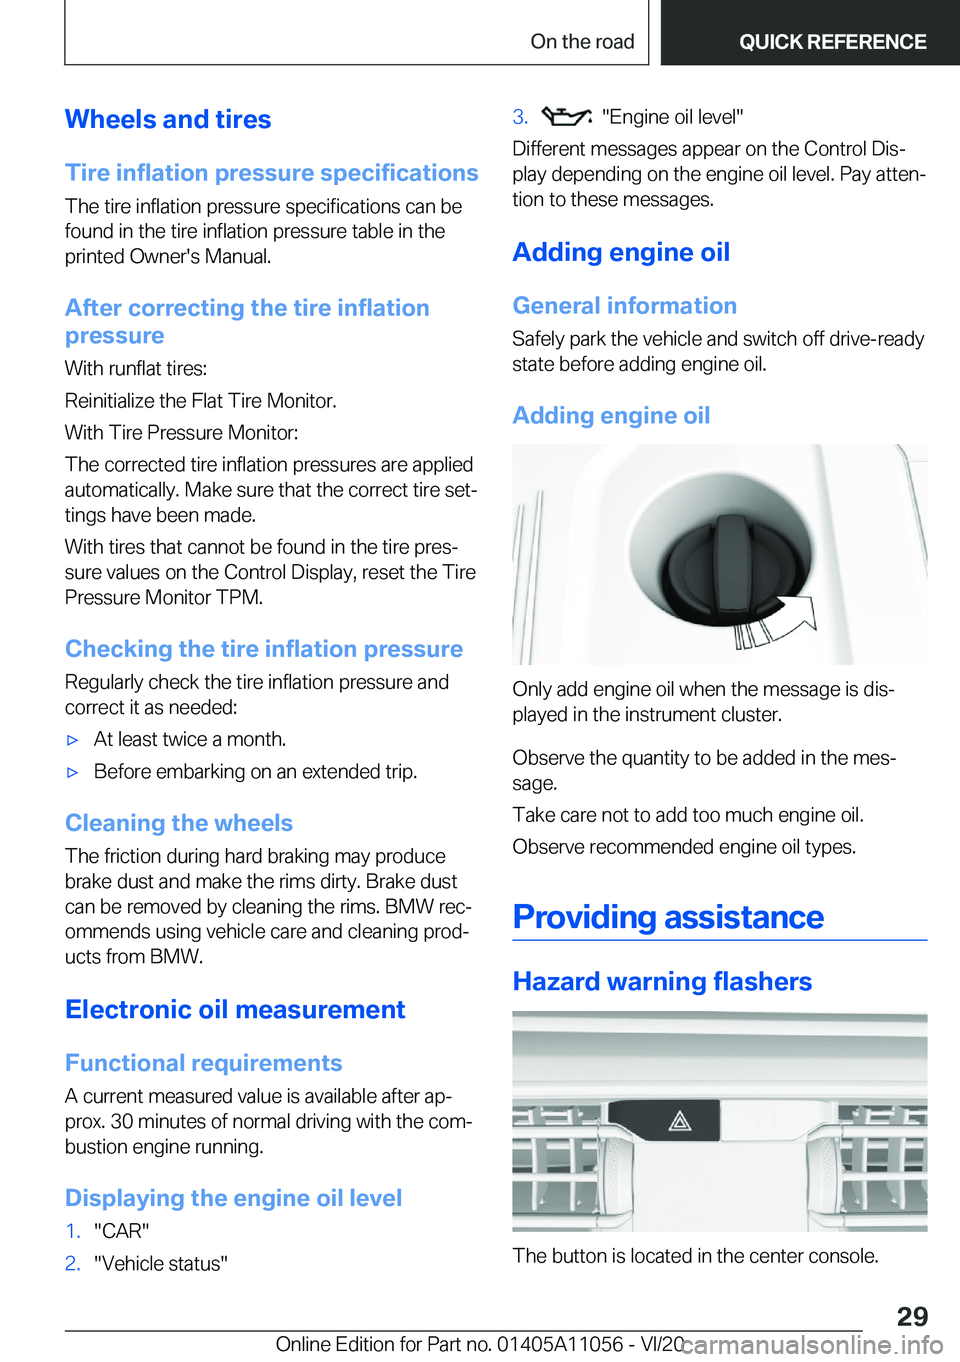 BMW X7 2021 Owners Manual �W�h�e�e�l�s��a�n�d��t�i�r�e�s
�T�i�r�e��i�n�f�l�a�t�i�o�n��p�r�e�s�s�u�r�e��s�p�e�c�i�f�i�c�a�t�i�o�n�s �T�h�e��t�i�r�e��i�n�f�l�a�t�i�o�n��p�r�e�s�s�u�r�e��s�p�e�c�i�f�i�c�a�t�i�o�n�s��c�a